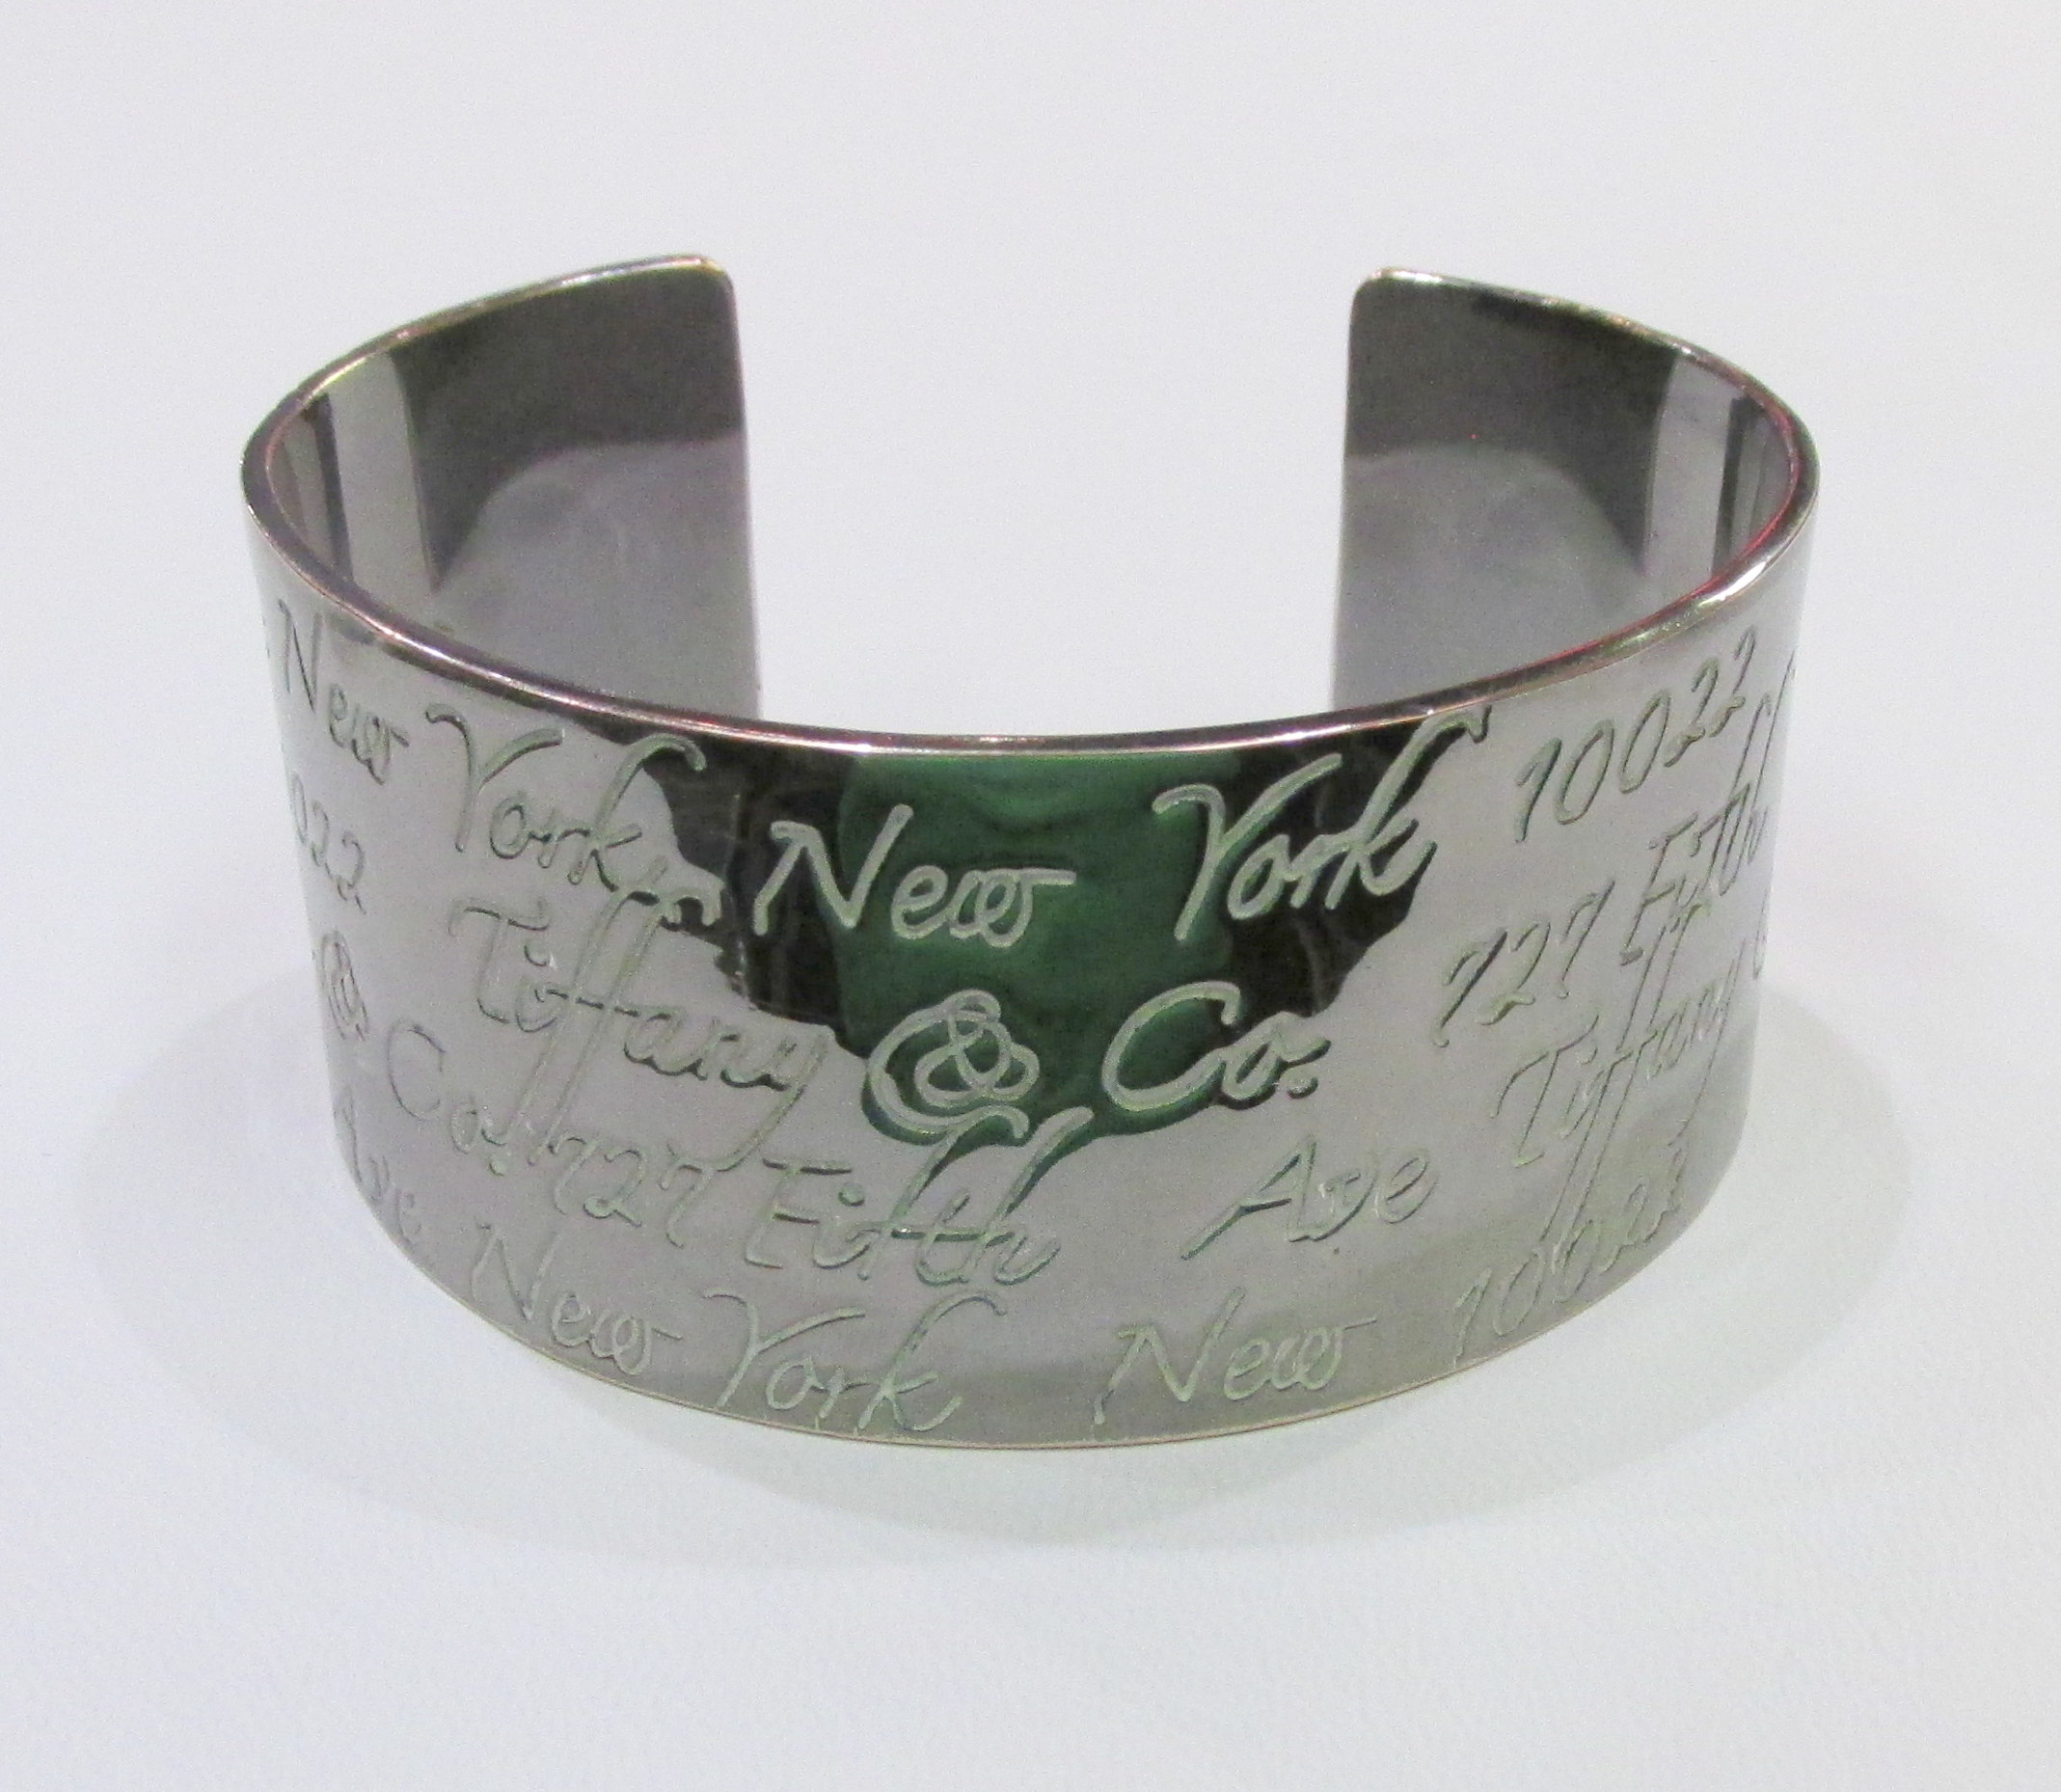 tiffany sterling silver cuff bracelet